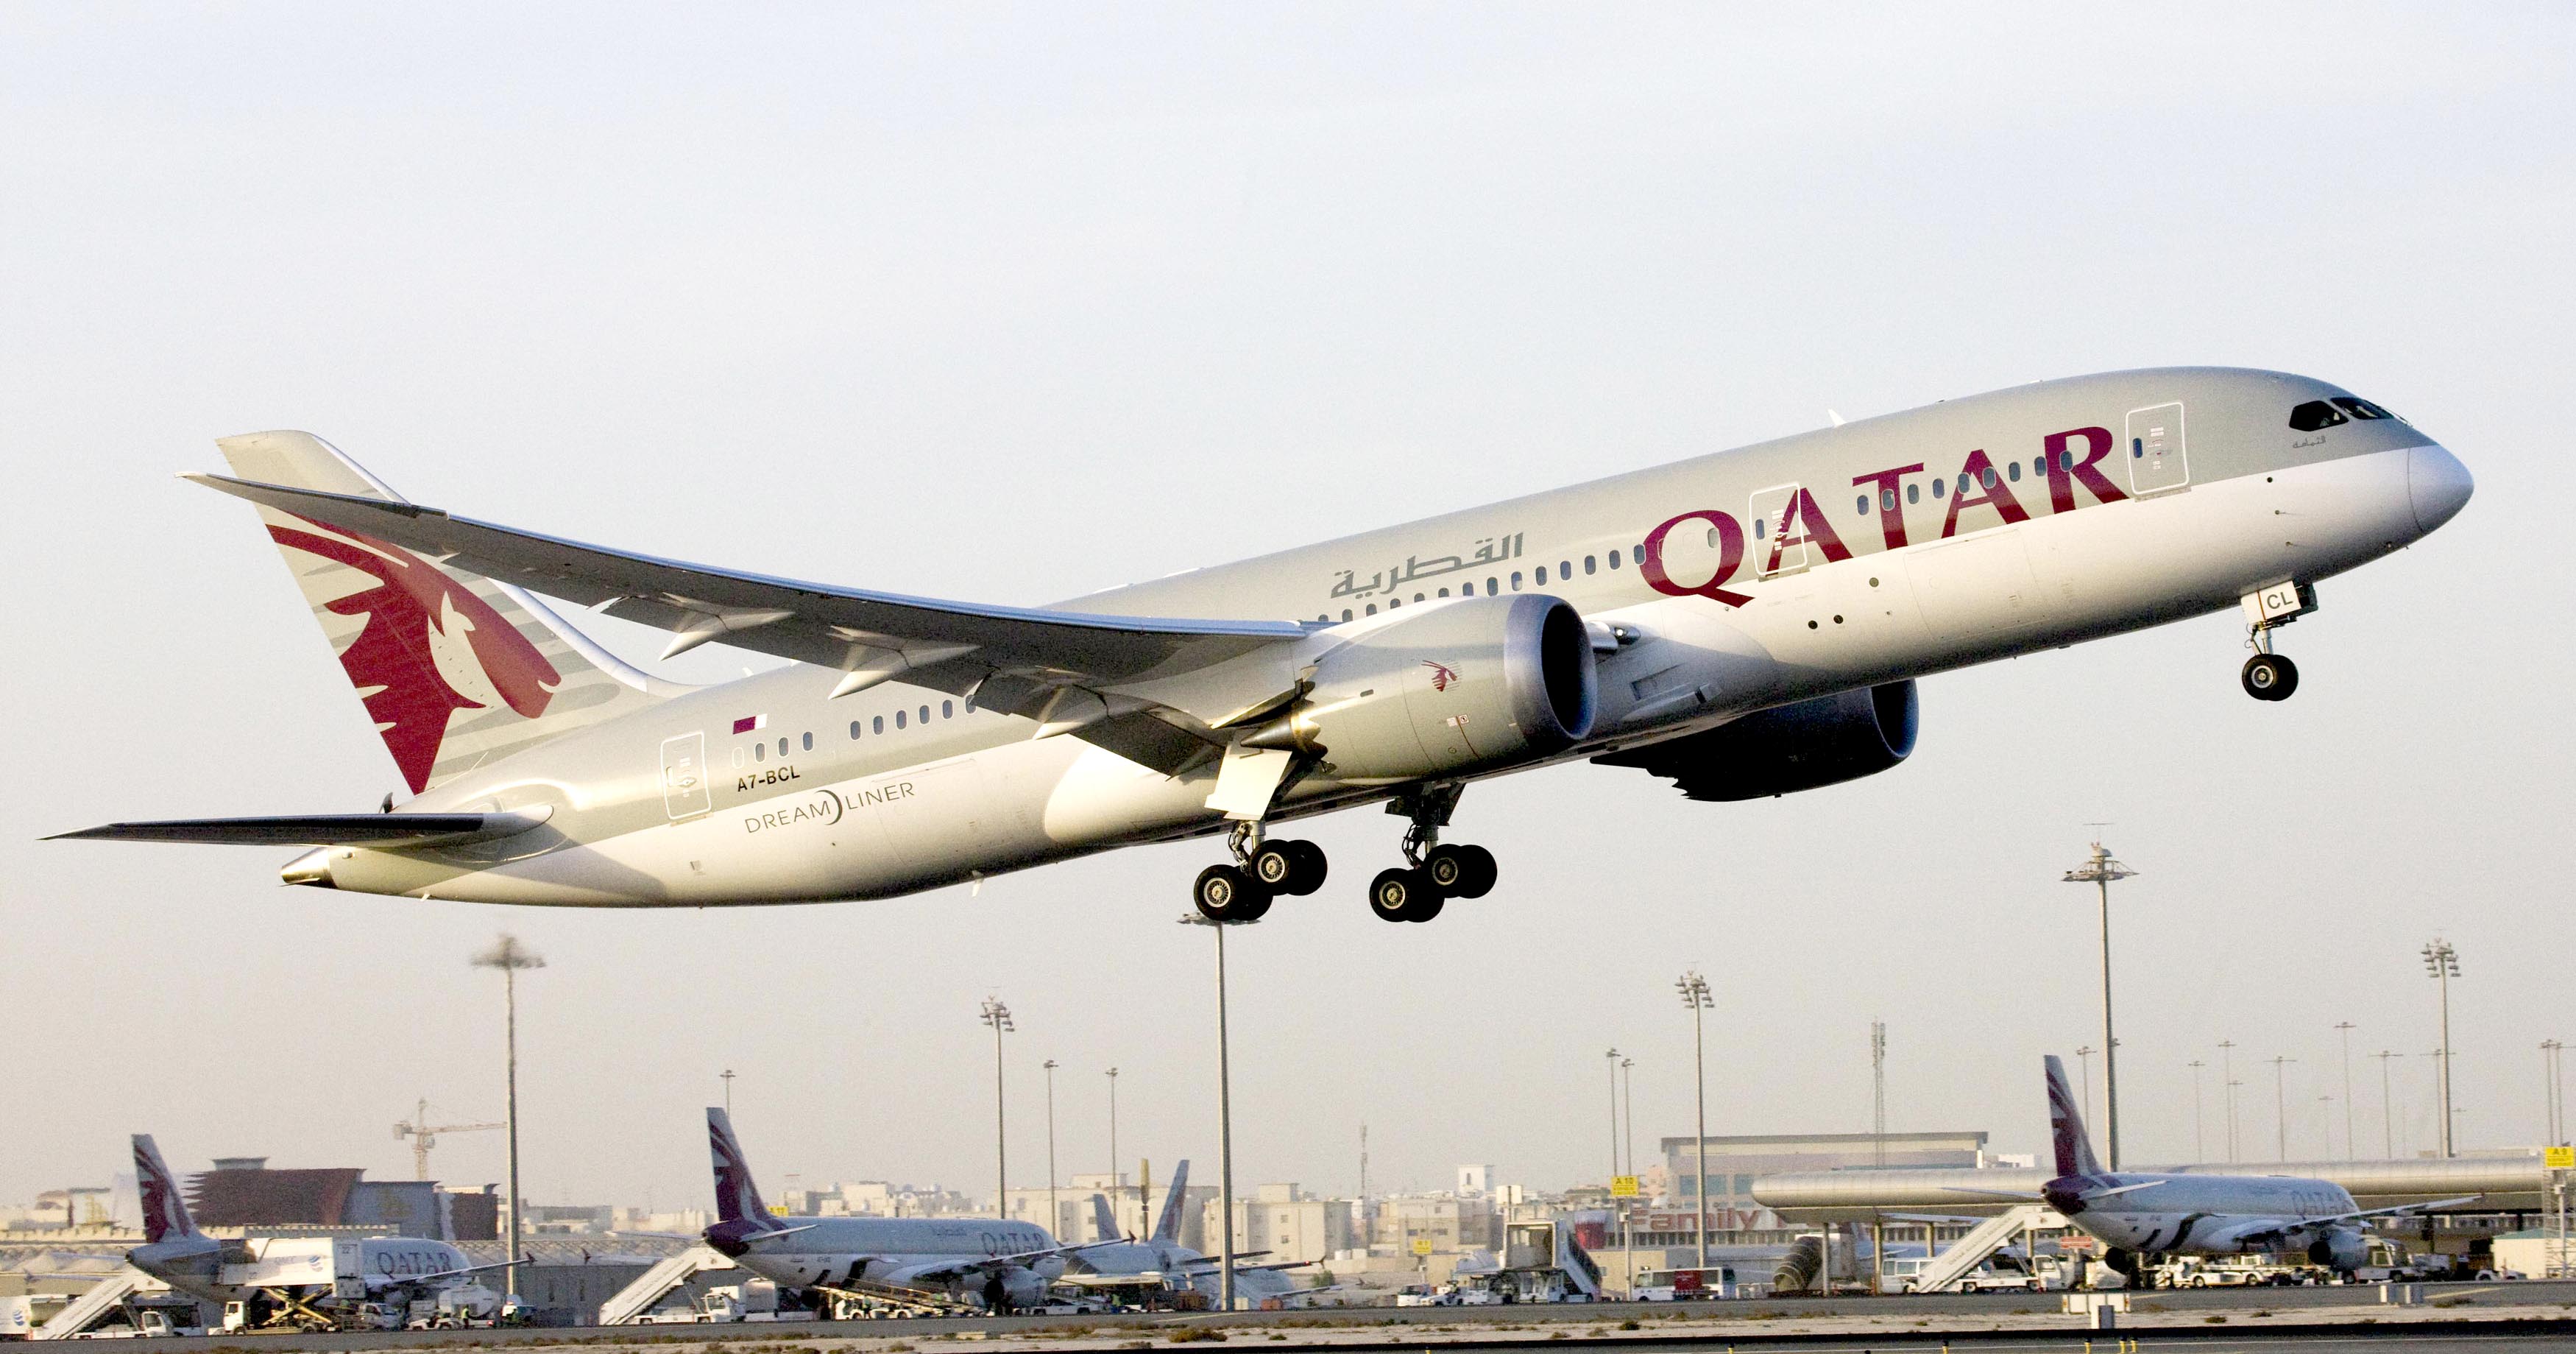 
Qatar Airways запустит Dreamliner в Вену